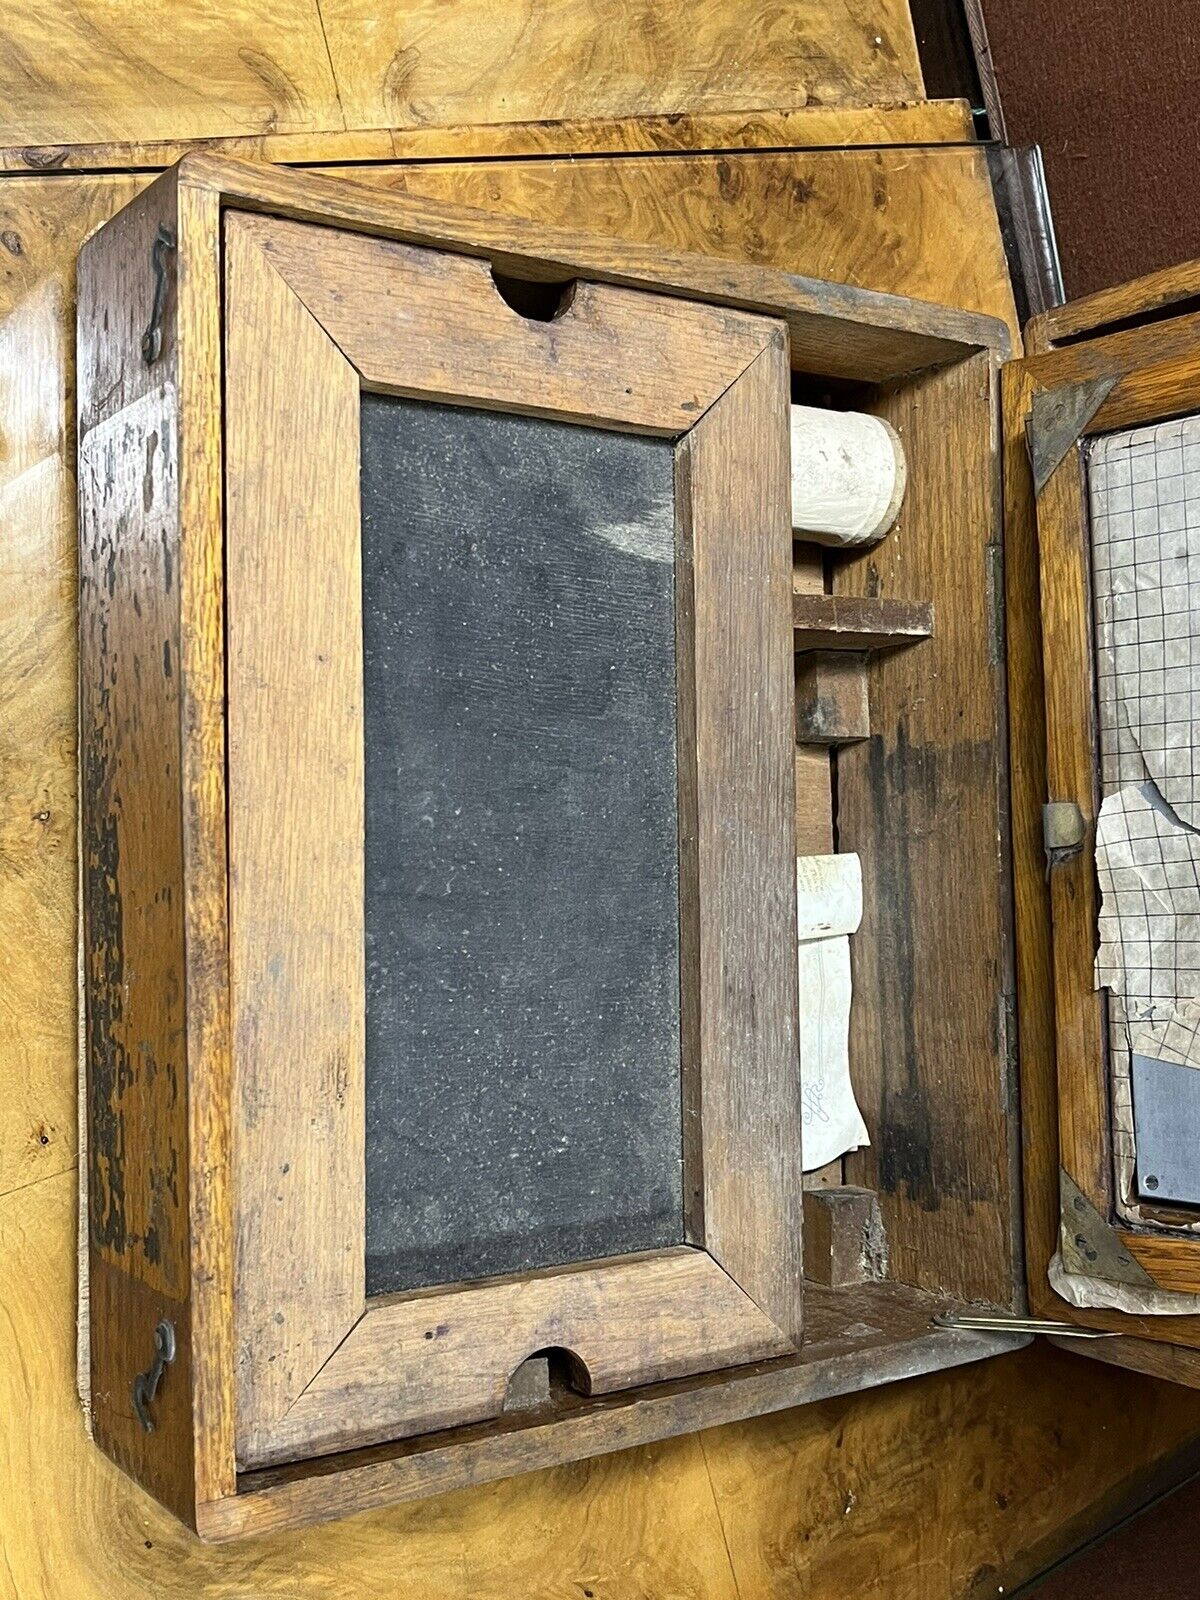 Antique Salesman Sample Duplicating Set In Original Box